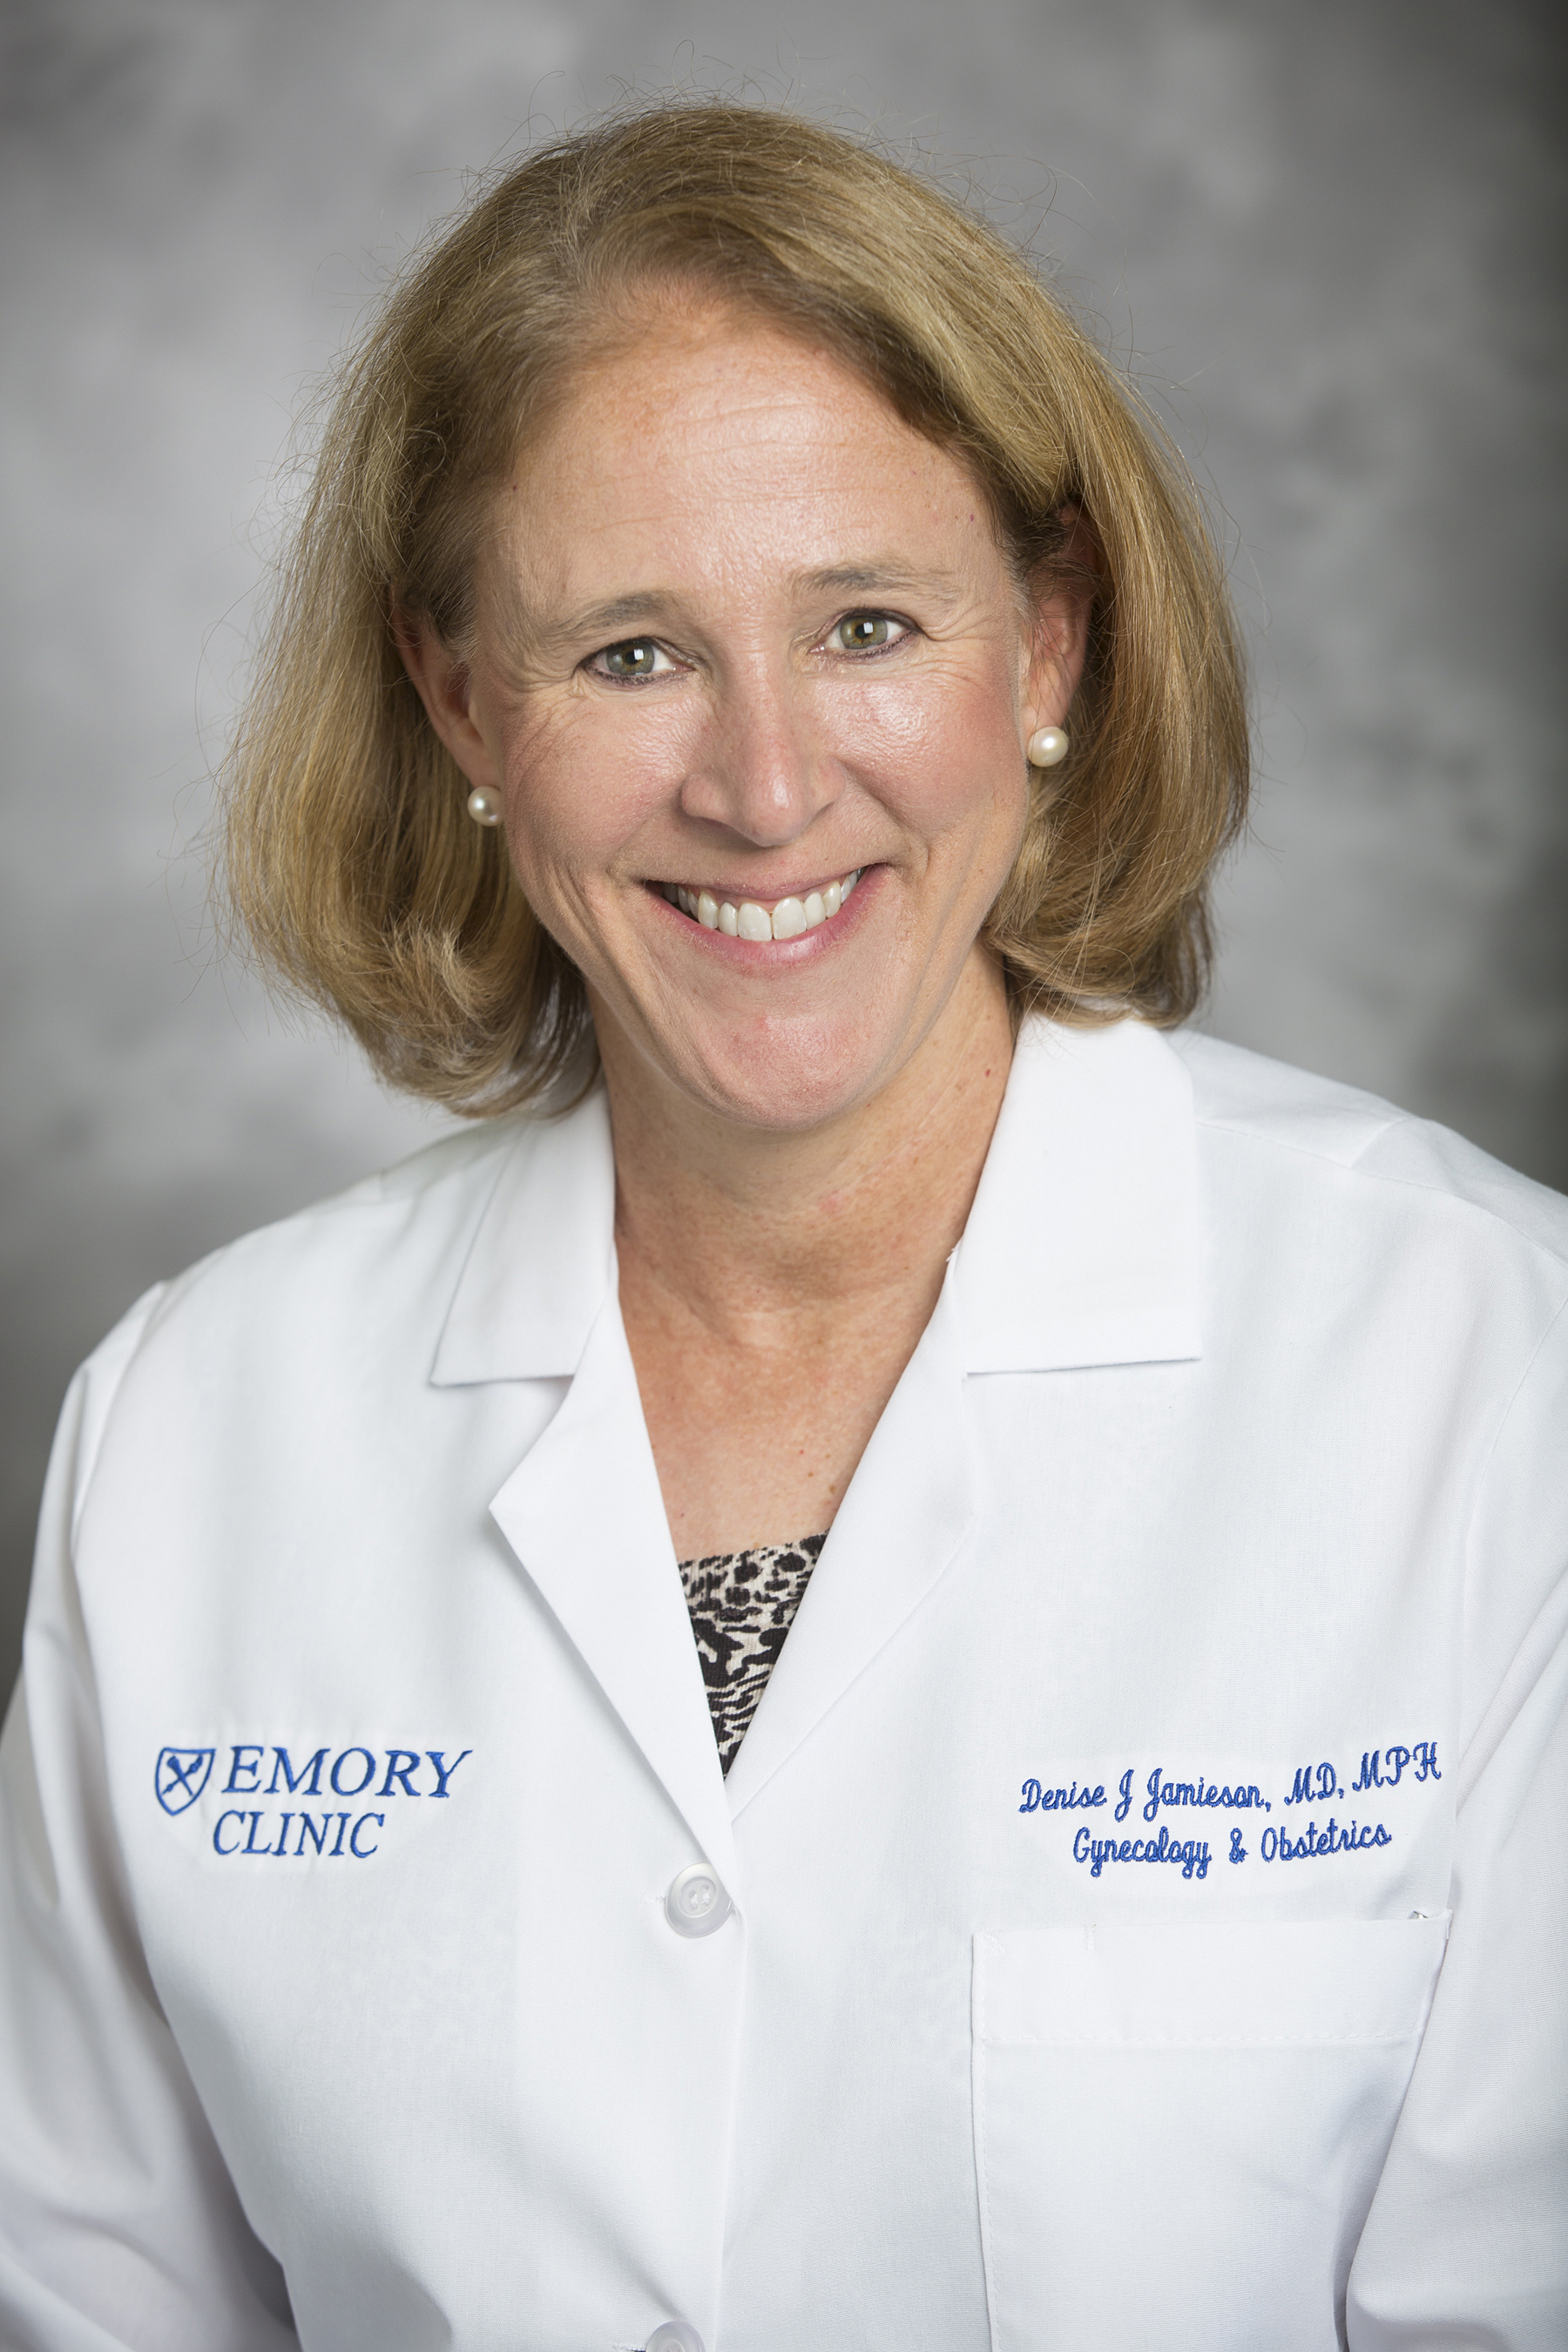 Denise J. Jamieson, MD, MPH